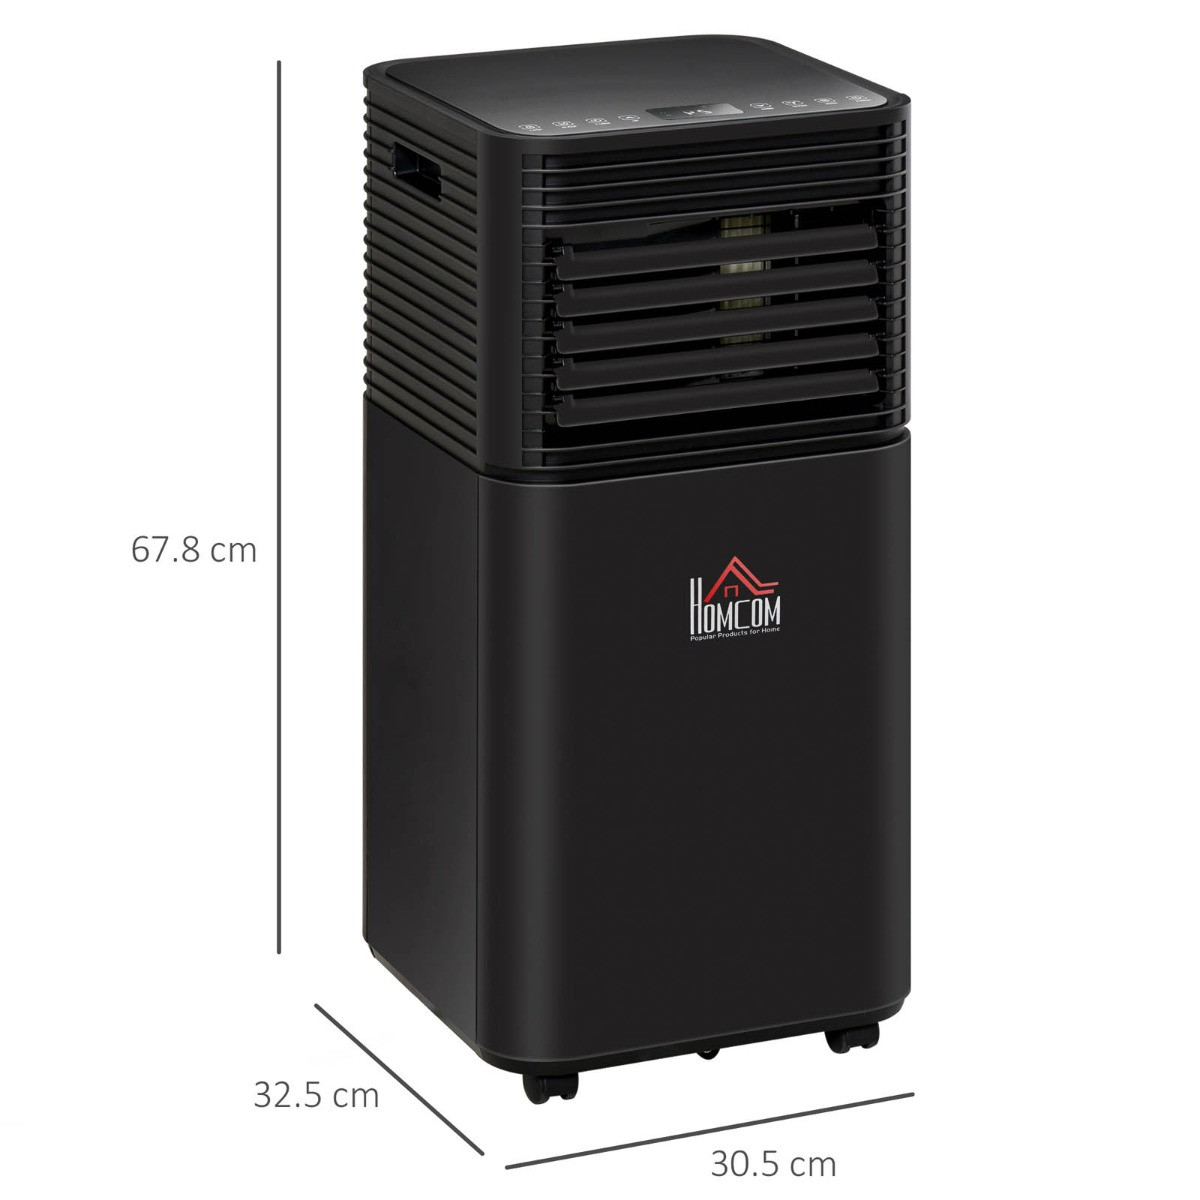 Homcom 4-In-1 Compact Portable LED Air Conditioner Unit - Black>